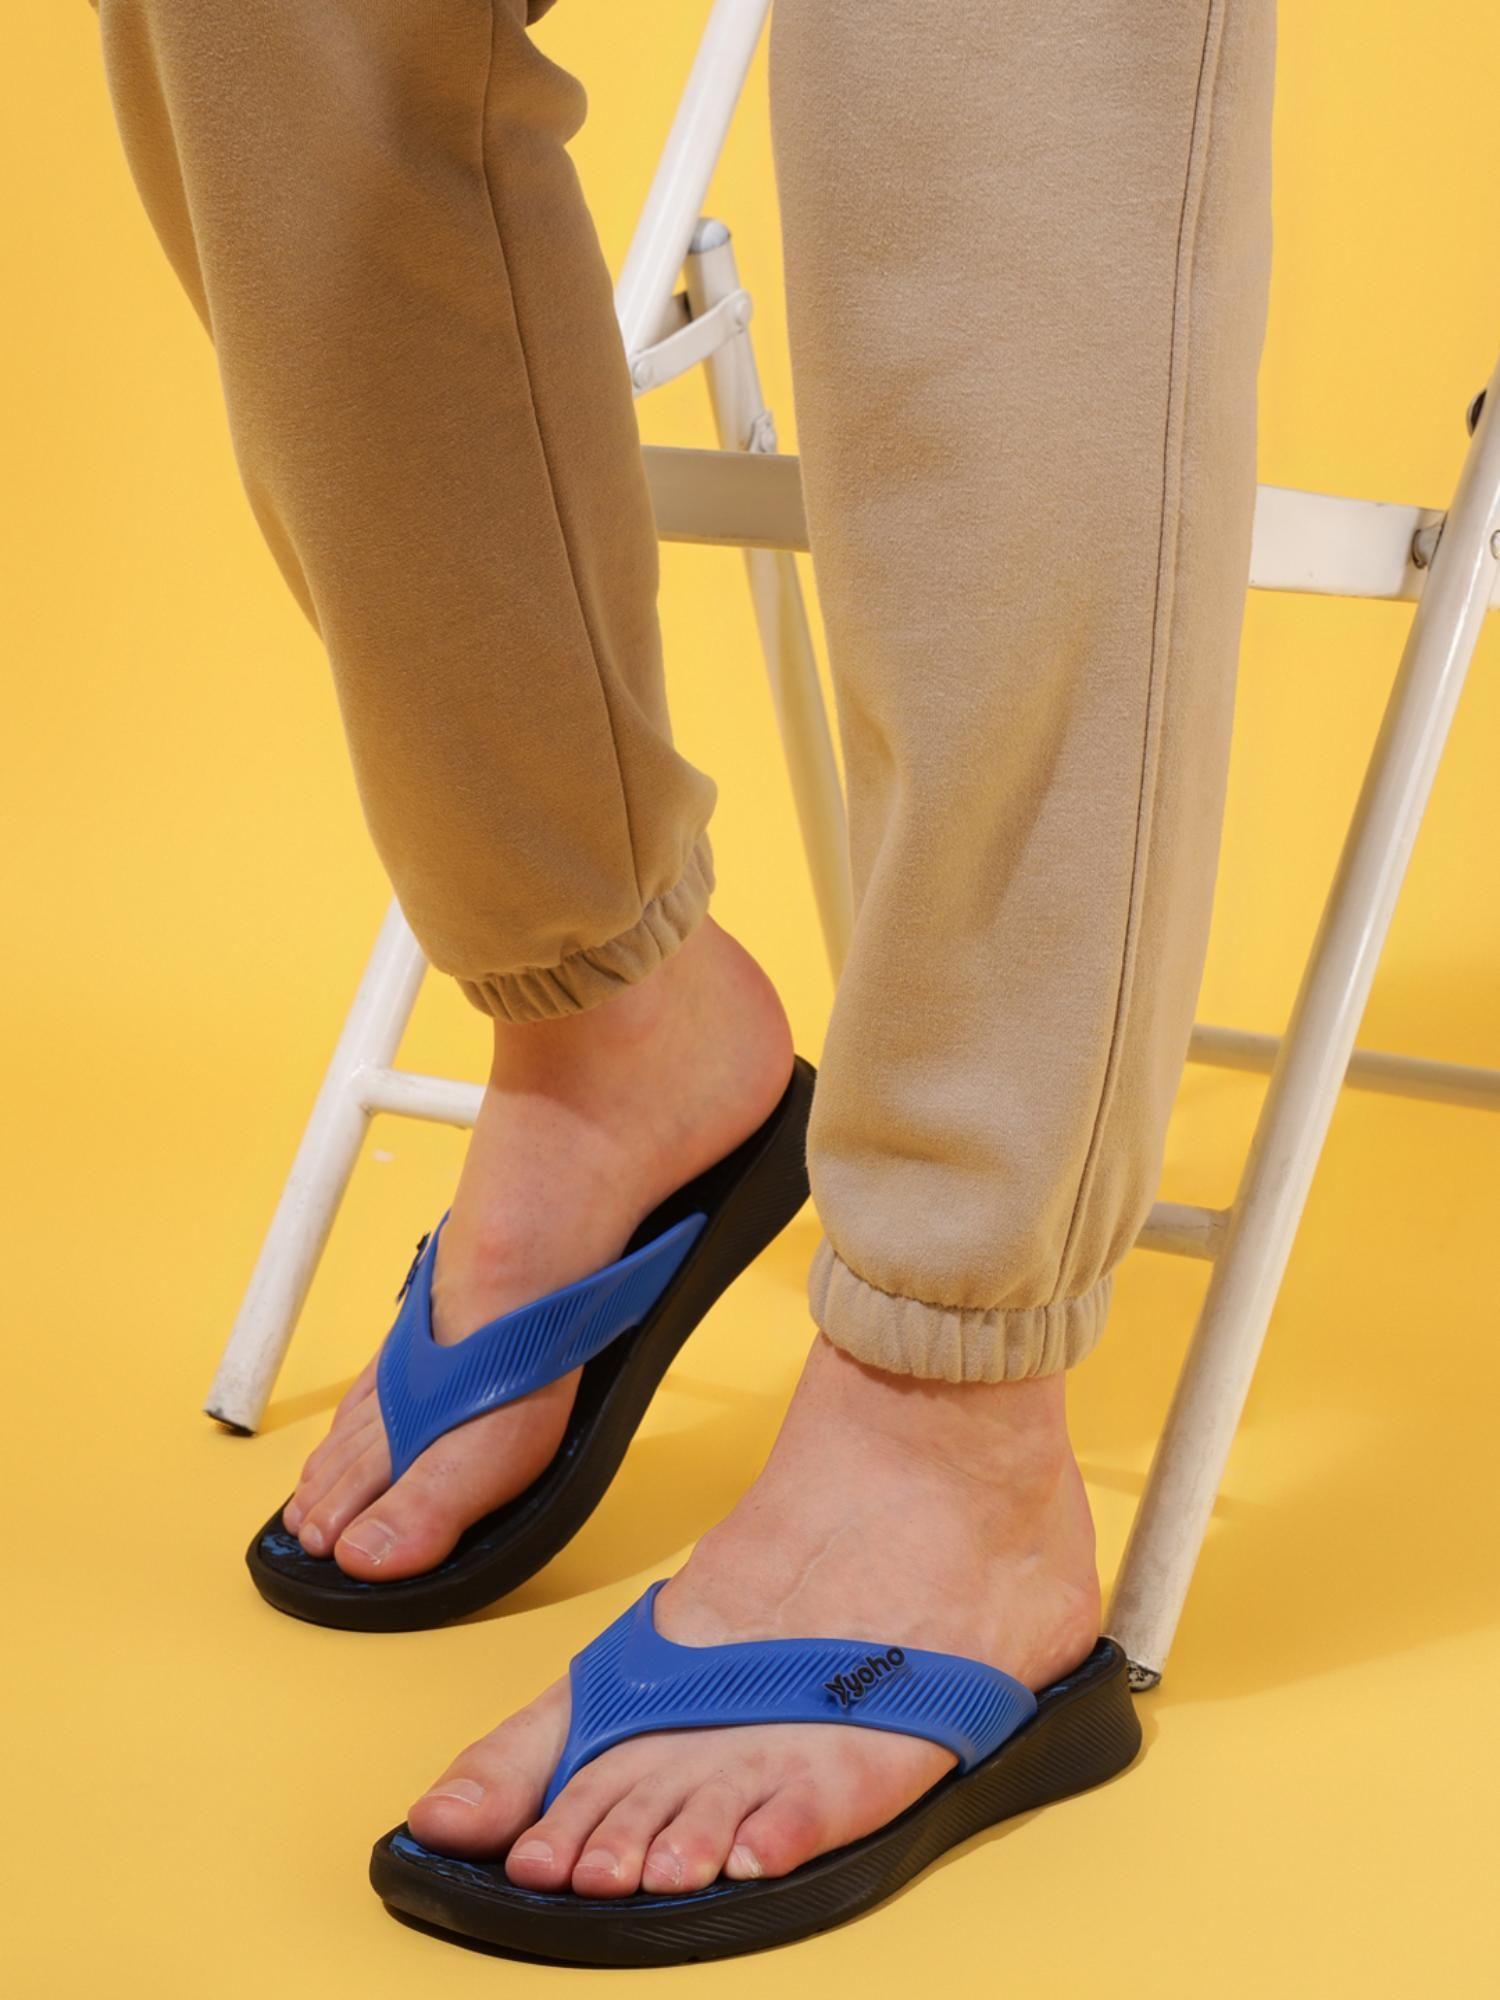 mist slippers for men casual wear lightweight